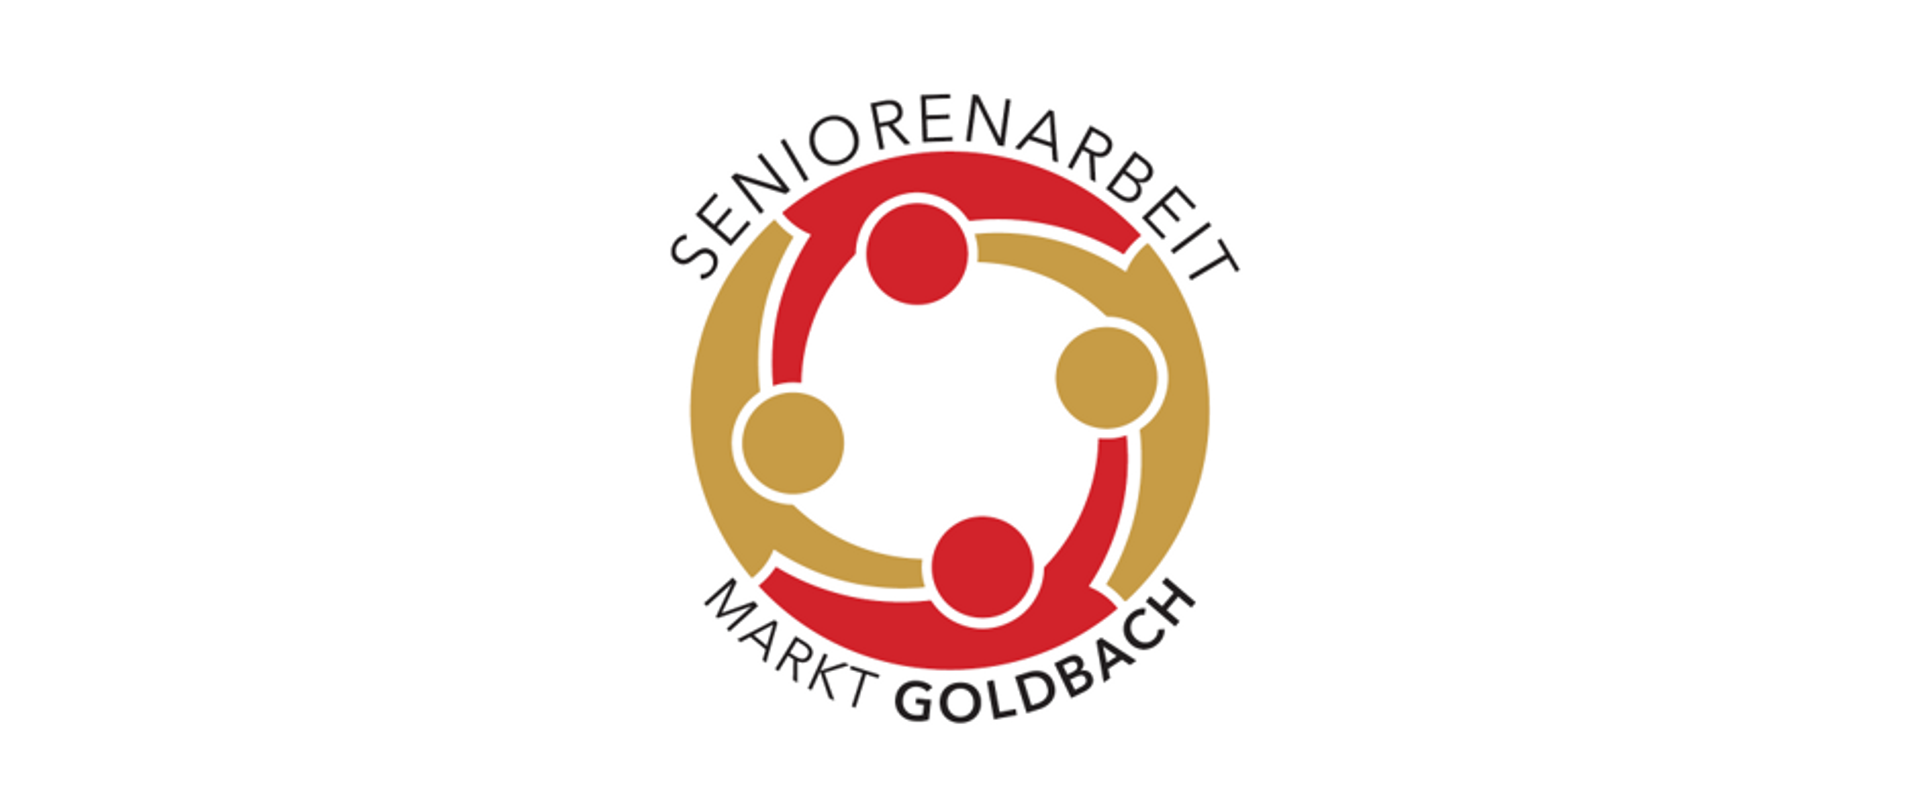 Seniorenarbeit-logo-neu